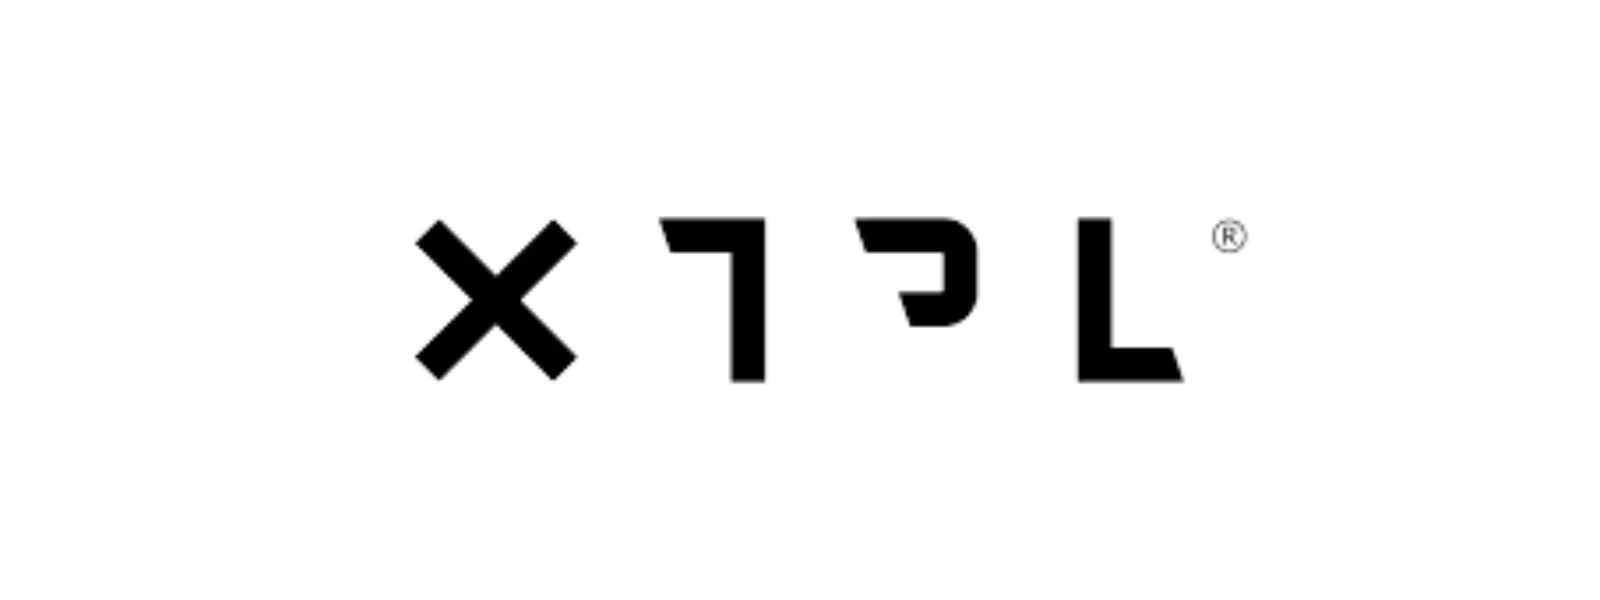 xtpl logo